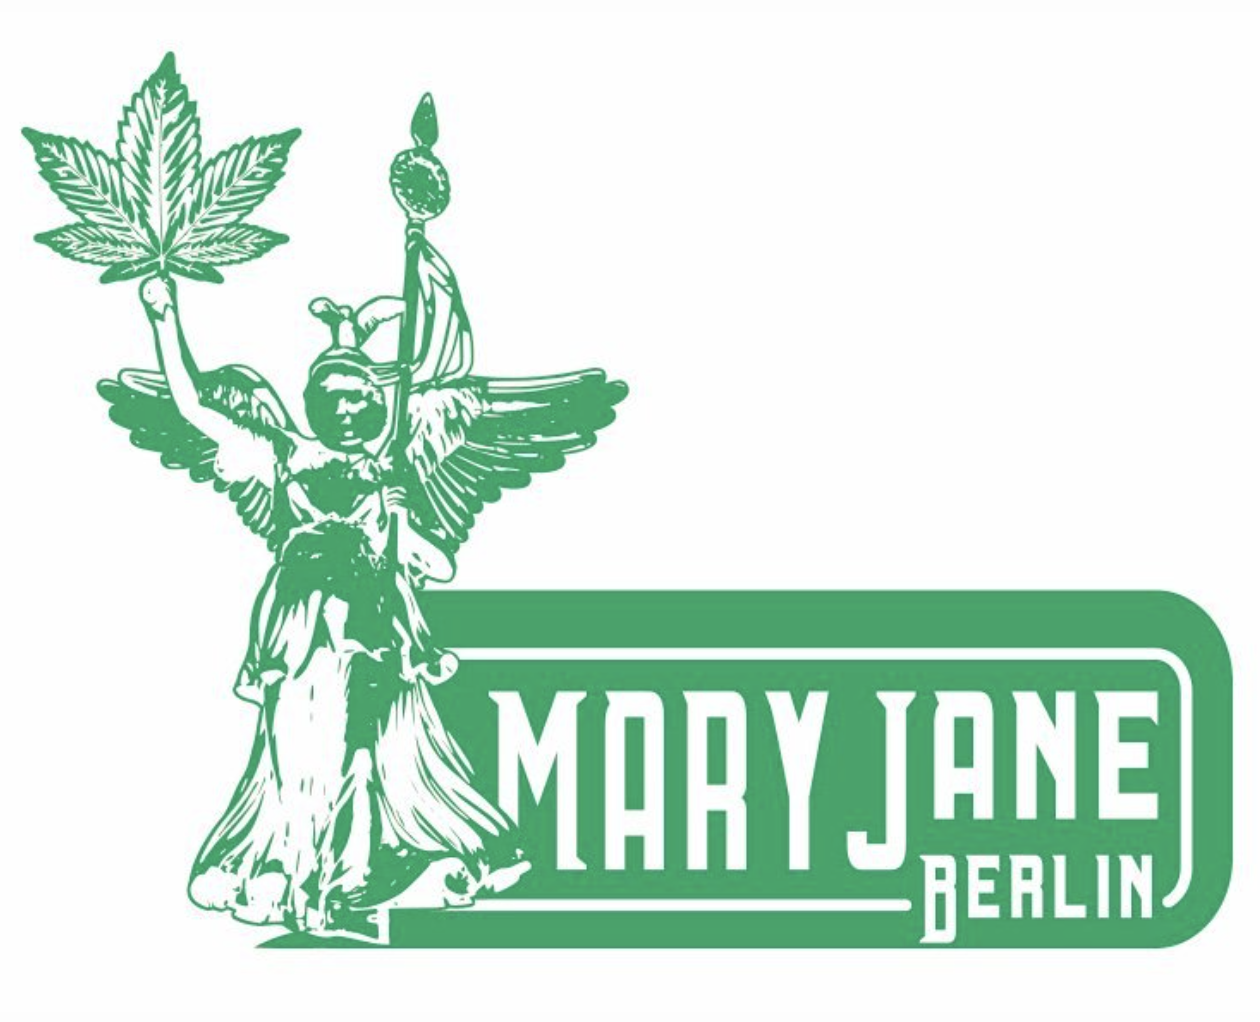 Mary Jane Berlin